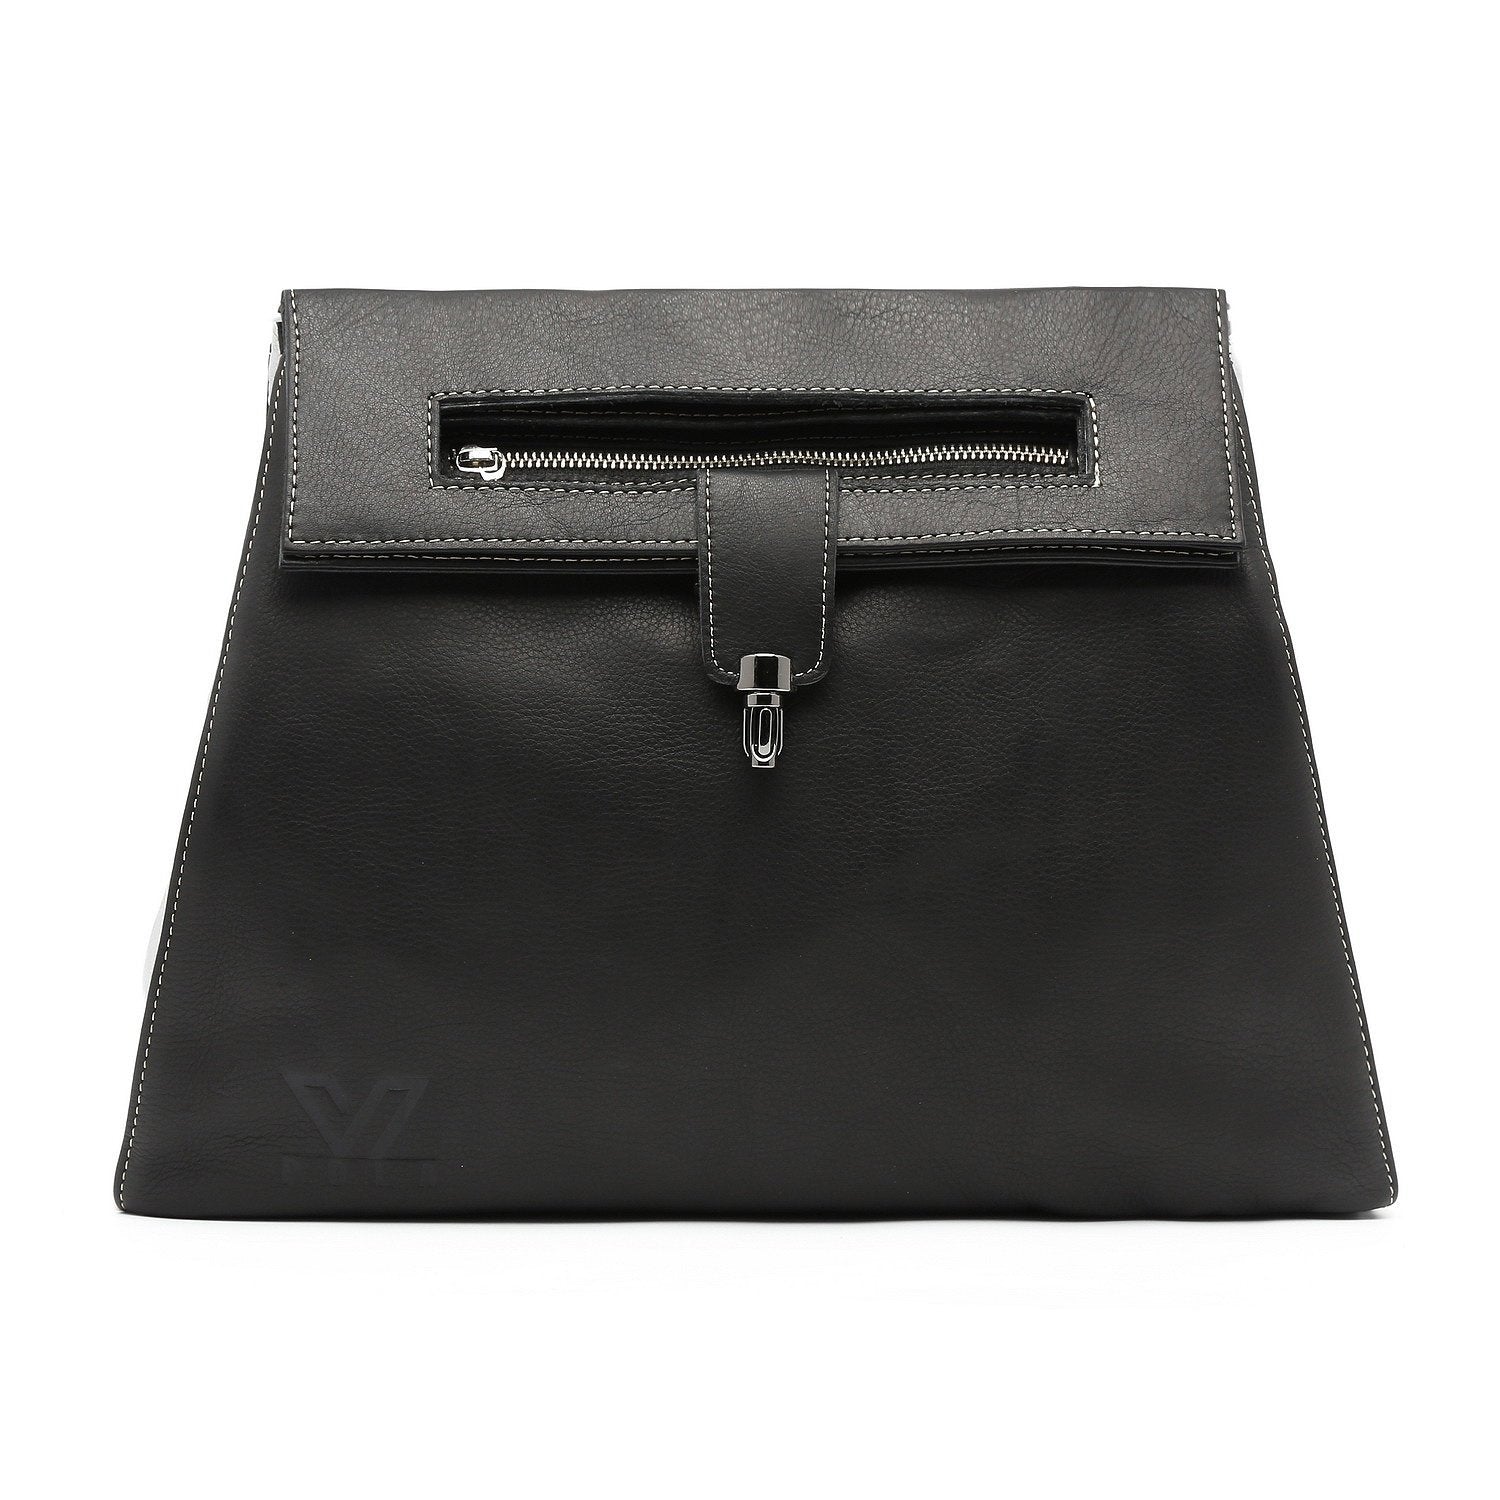 New York - Black and Silver Messenger Bag, Genuine Leather Bag, Handma – Pola V Smart Bags